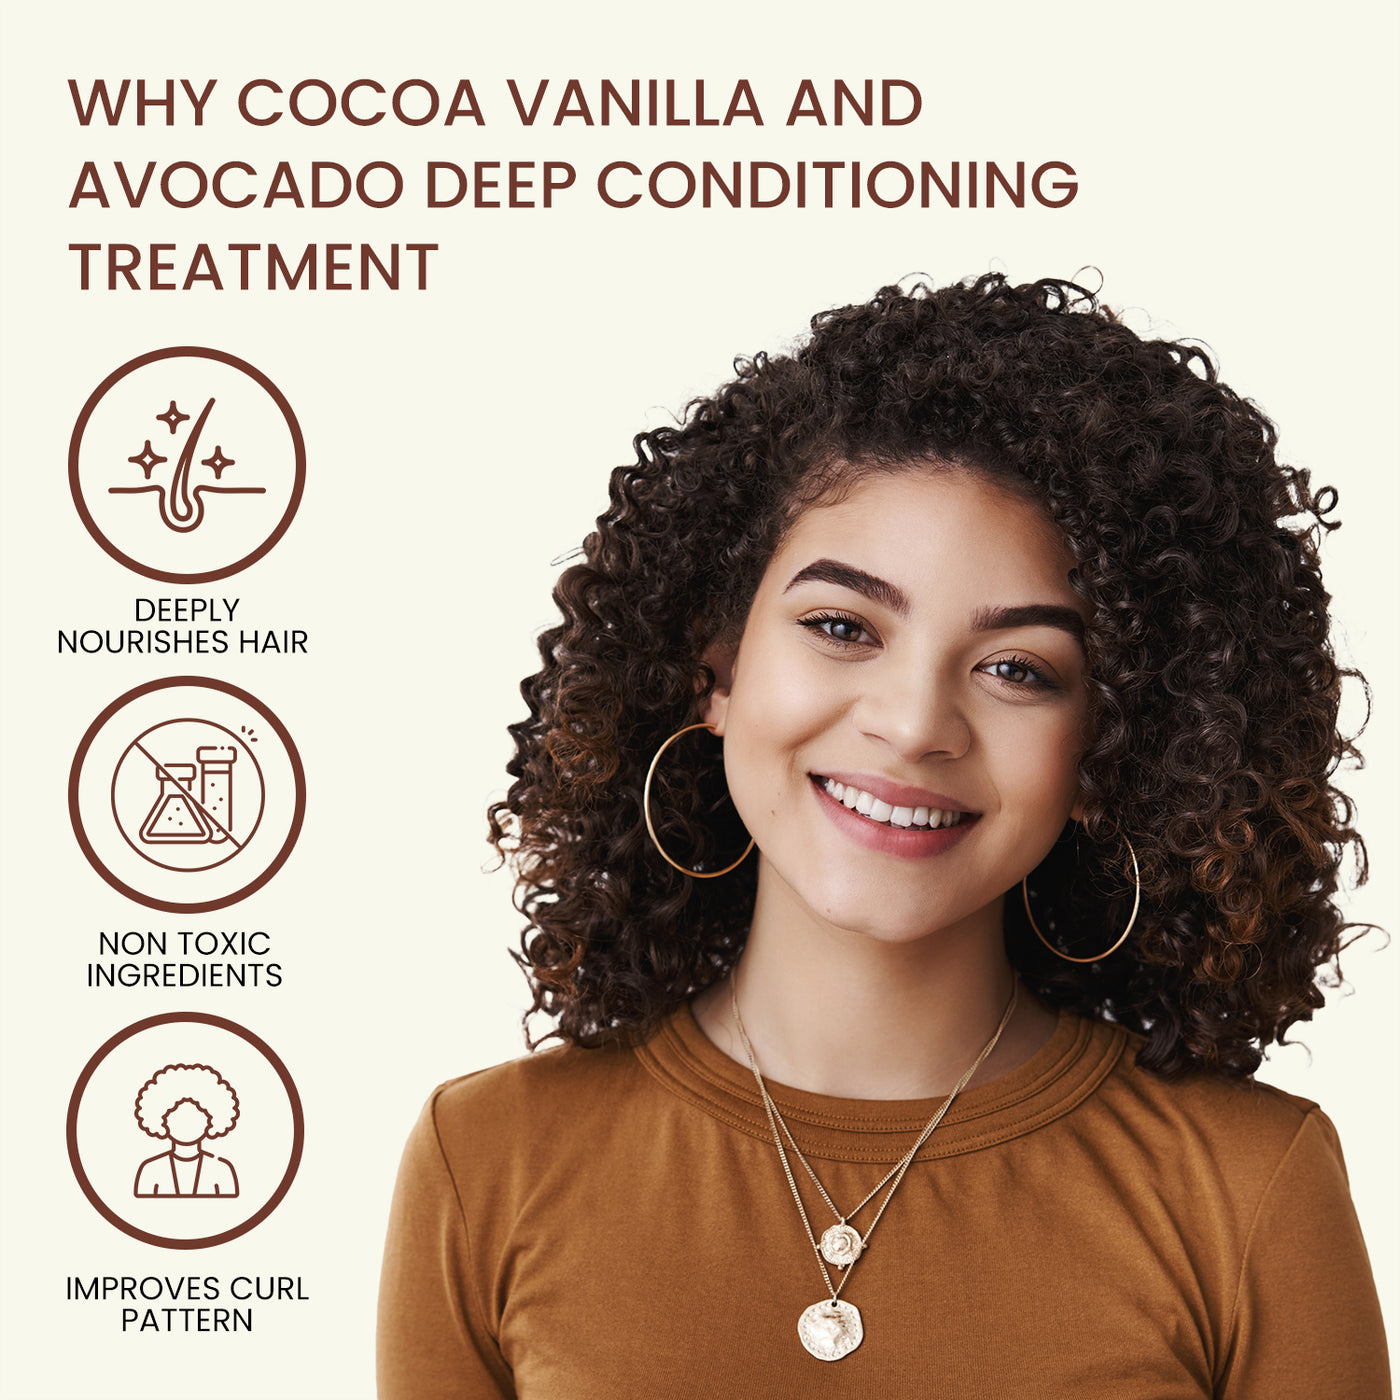 Cocoa Vanilla and Avocado Deep Conditioning Treatment